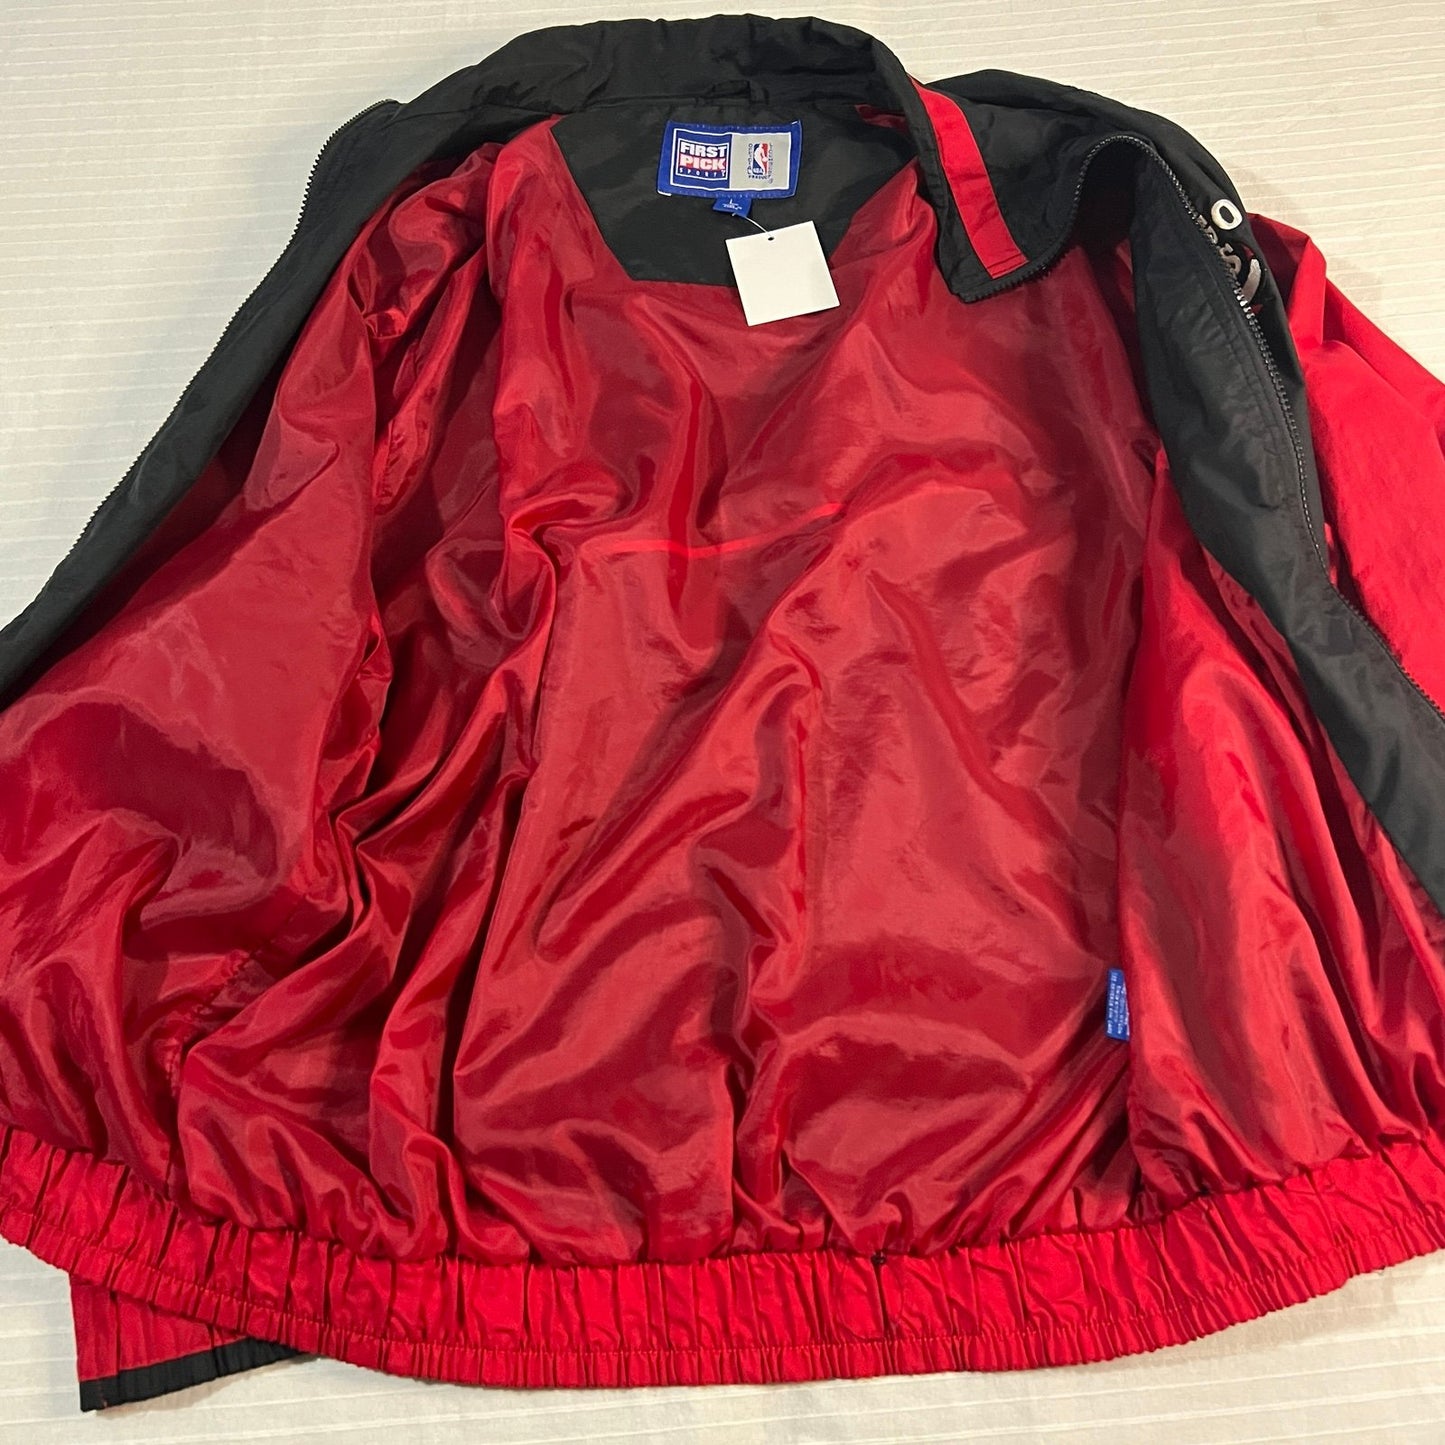 Vintage Chicago Bulls Jacket Mens Large First Pick Zup Up NBA Black Red 90's